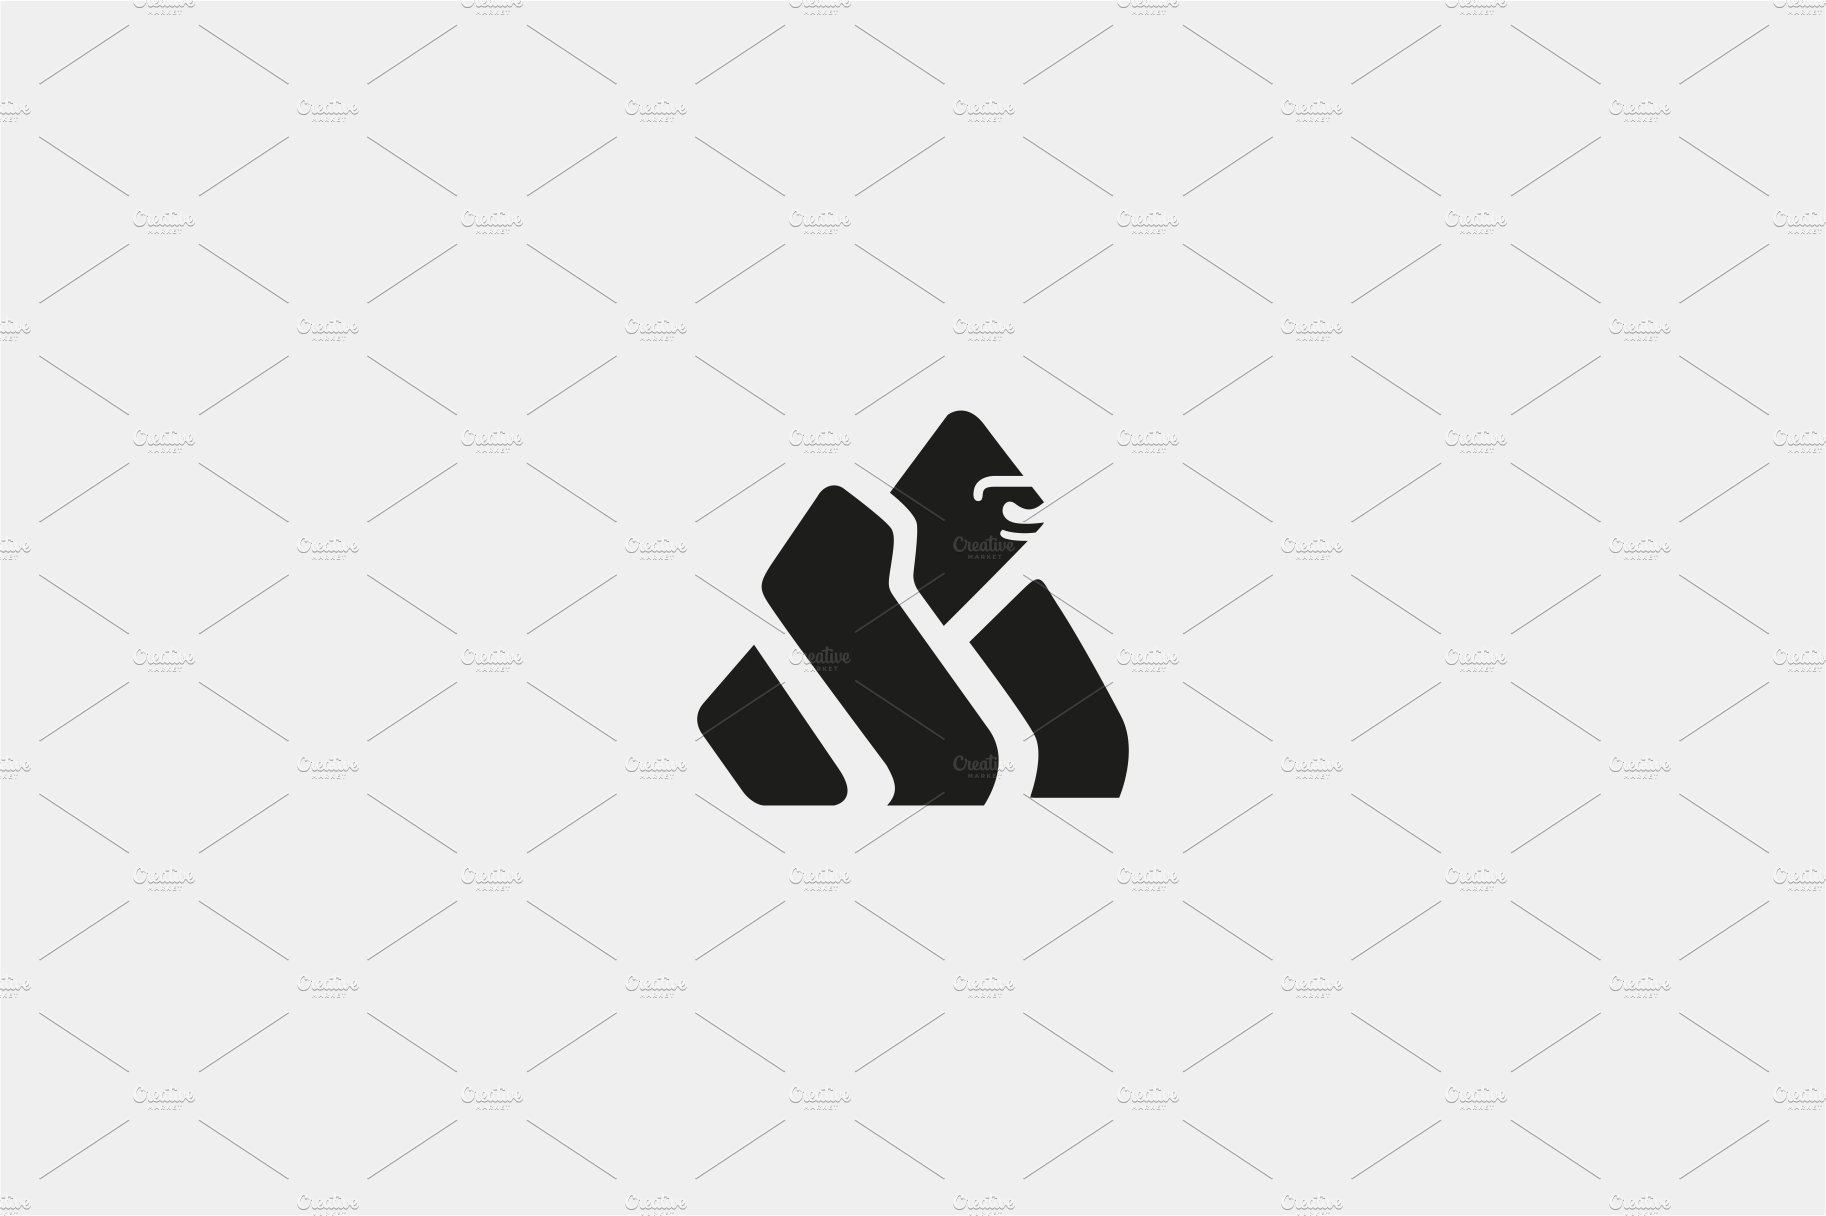 Gorilla Logo Design cover image.